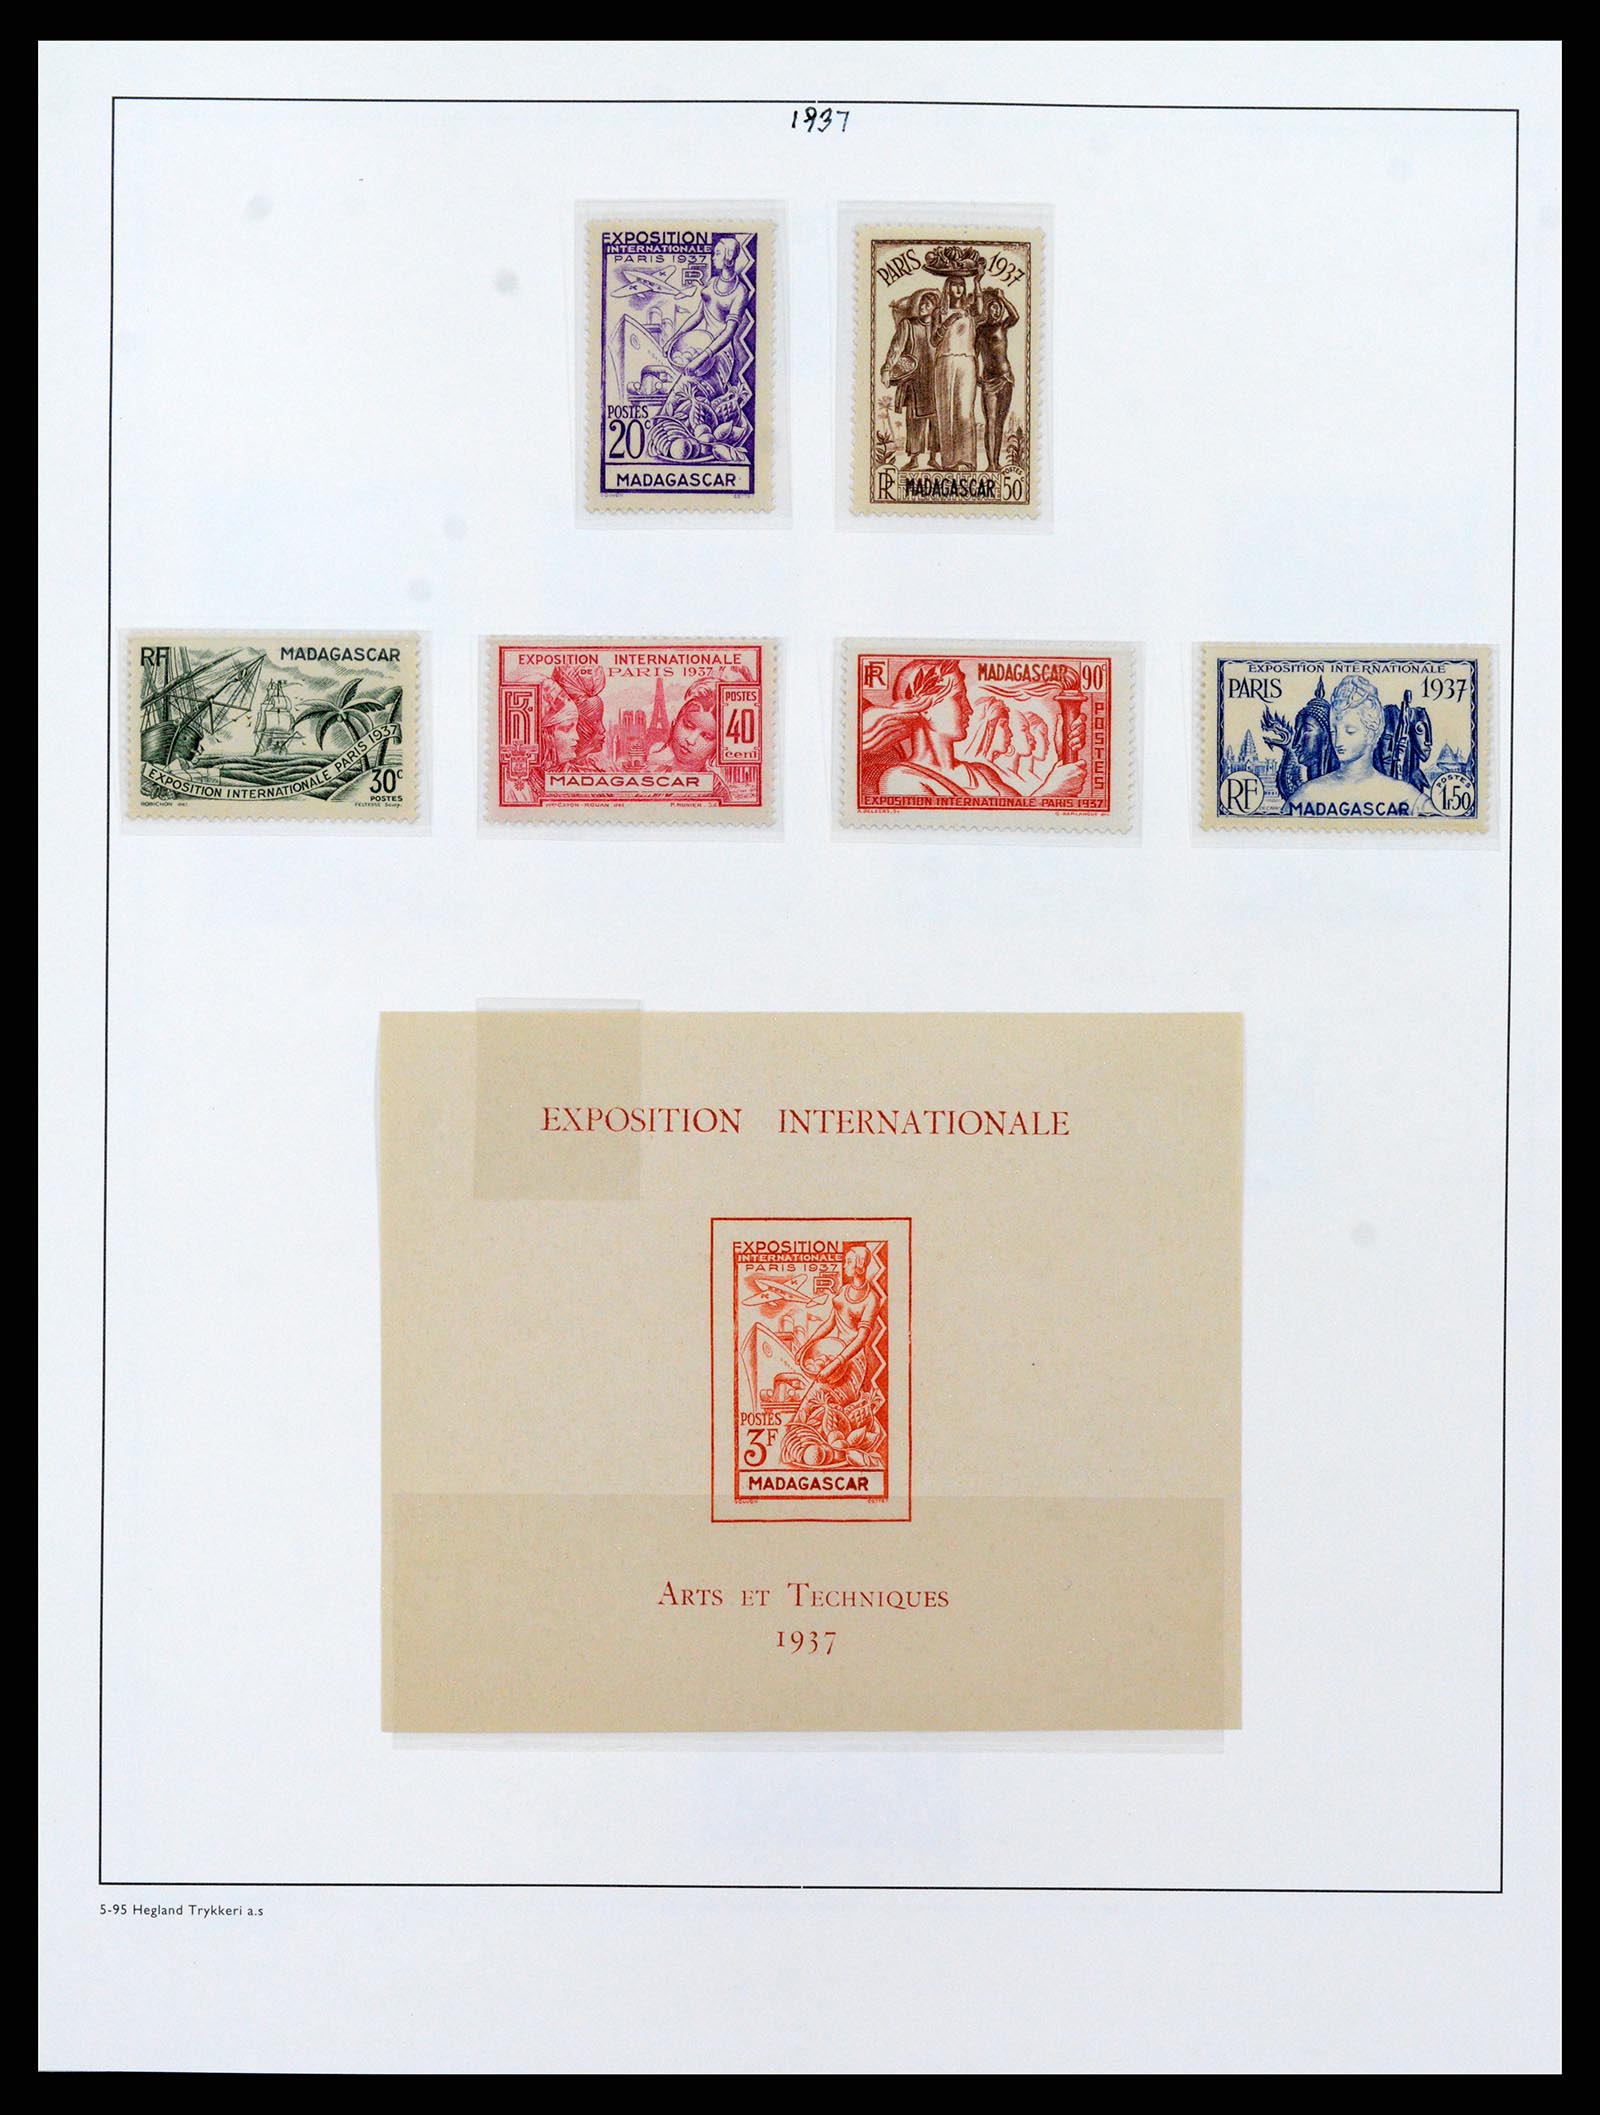 37929 073 - Stamp Collection 37929 Madagascar 1889-2000.